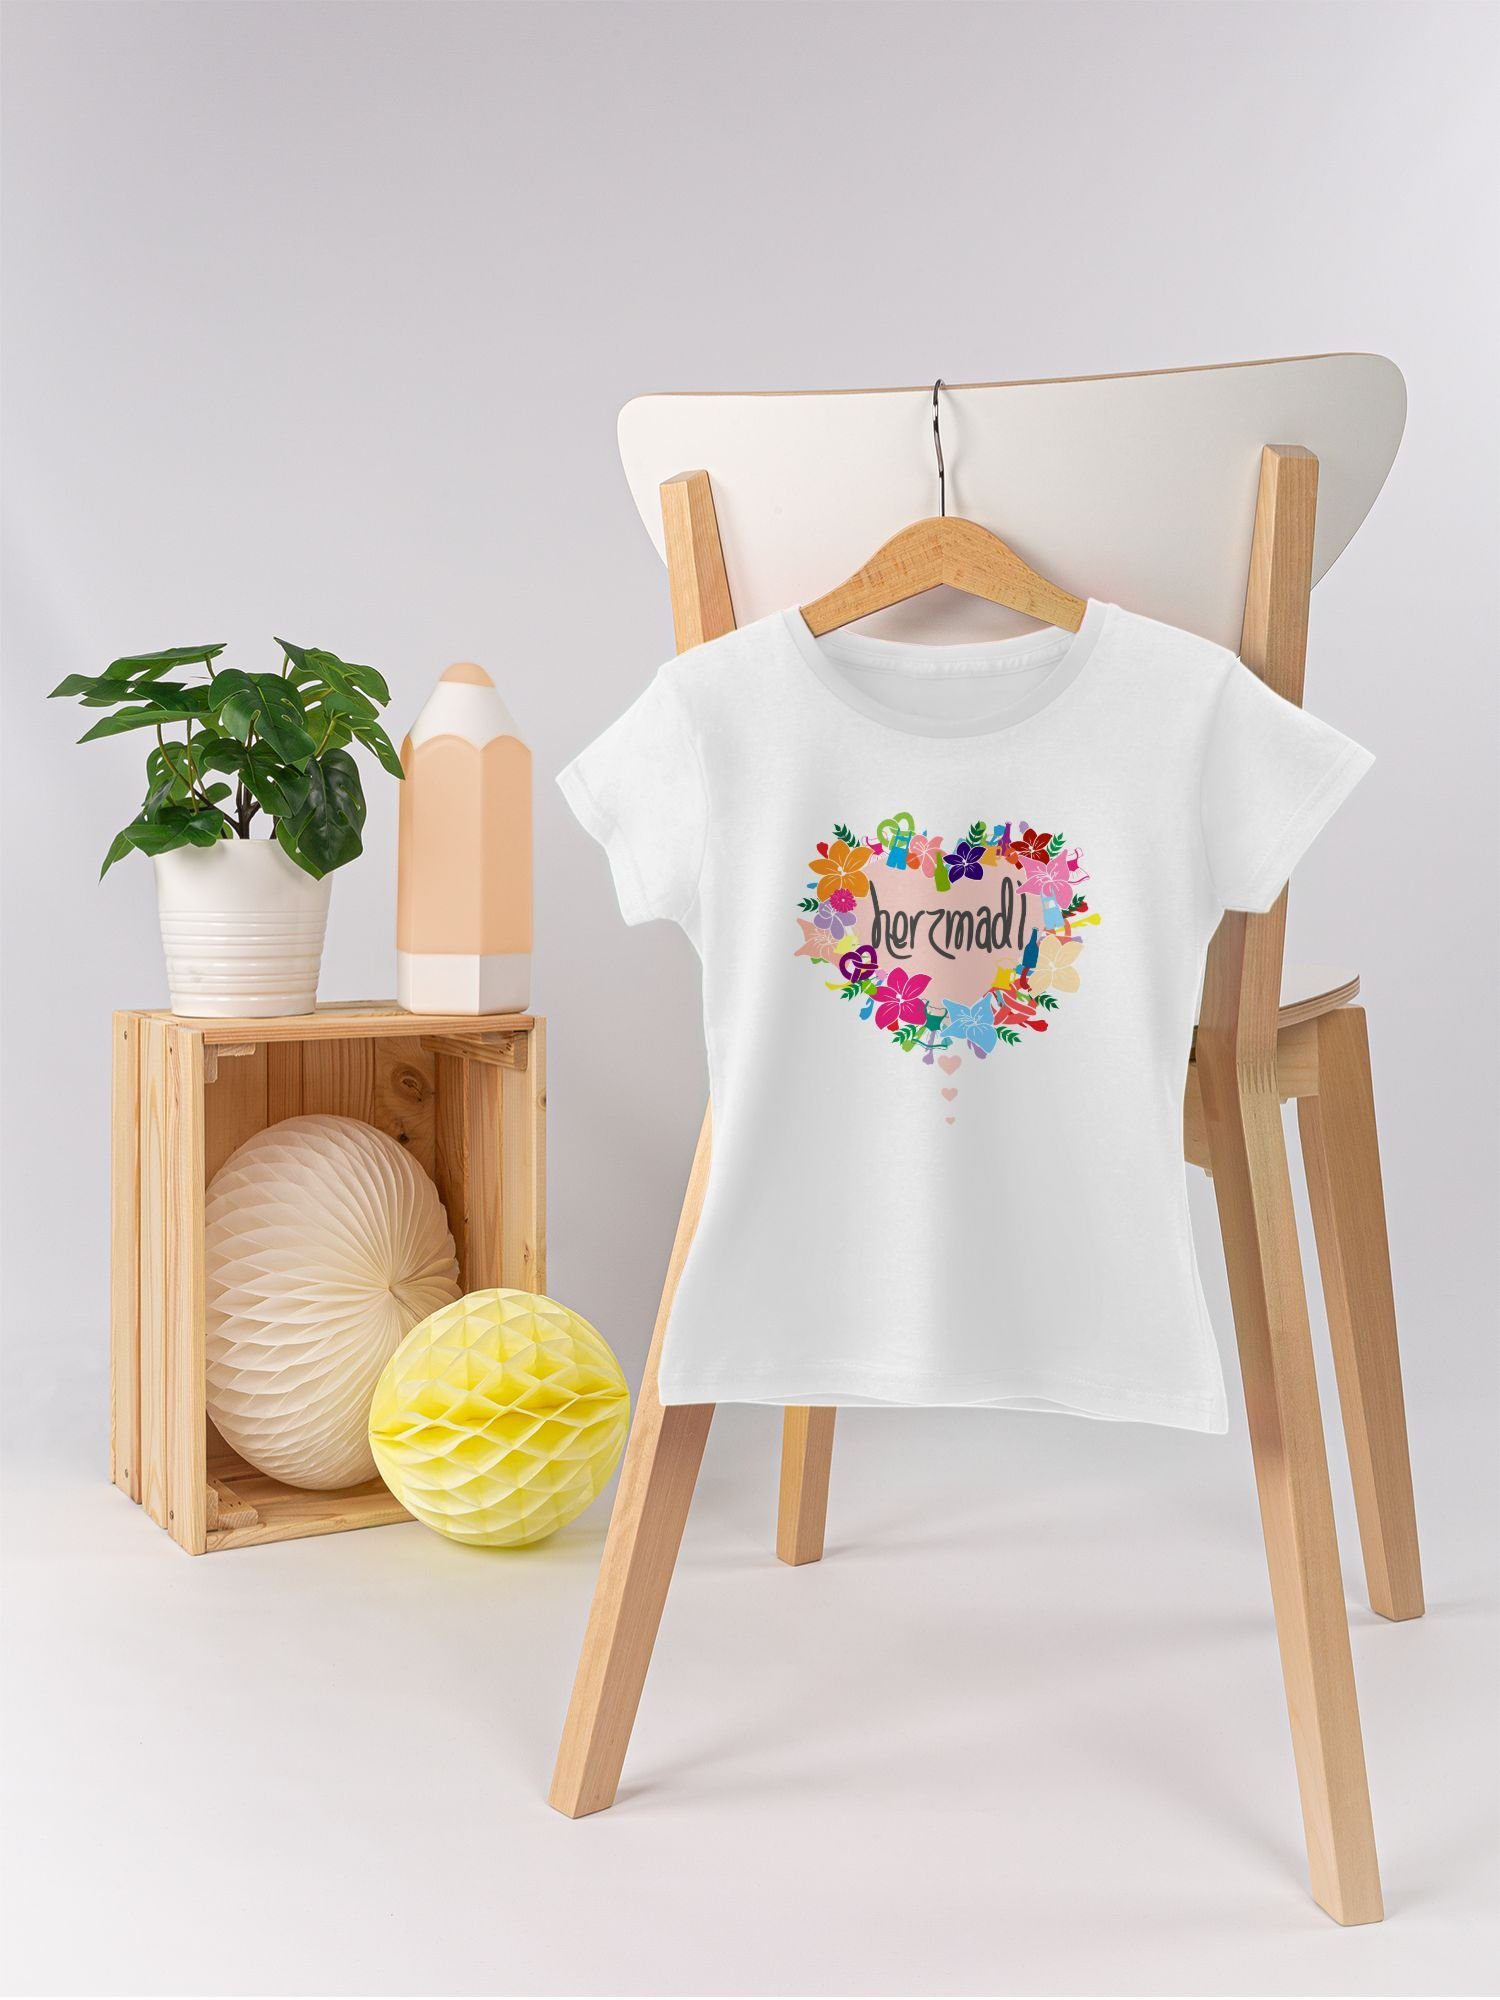 Shirtracer Kinder Oktoberfest Weiß Herzmadl Outfit Mode 1 T-Shirt für